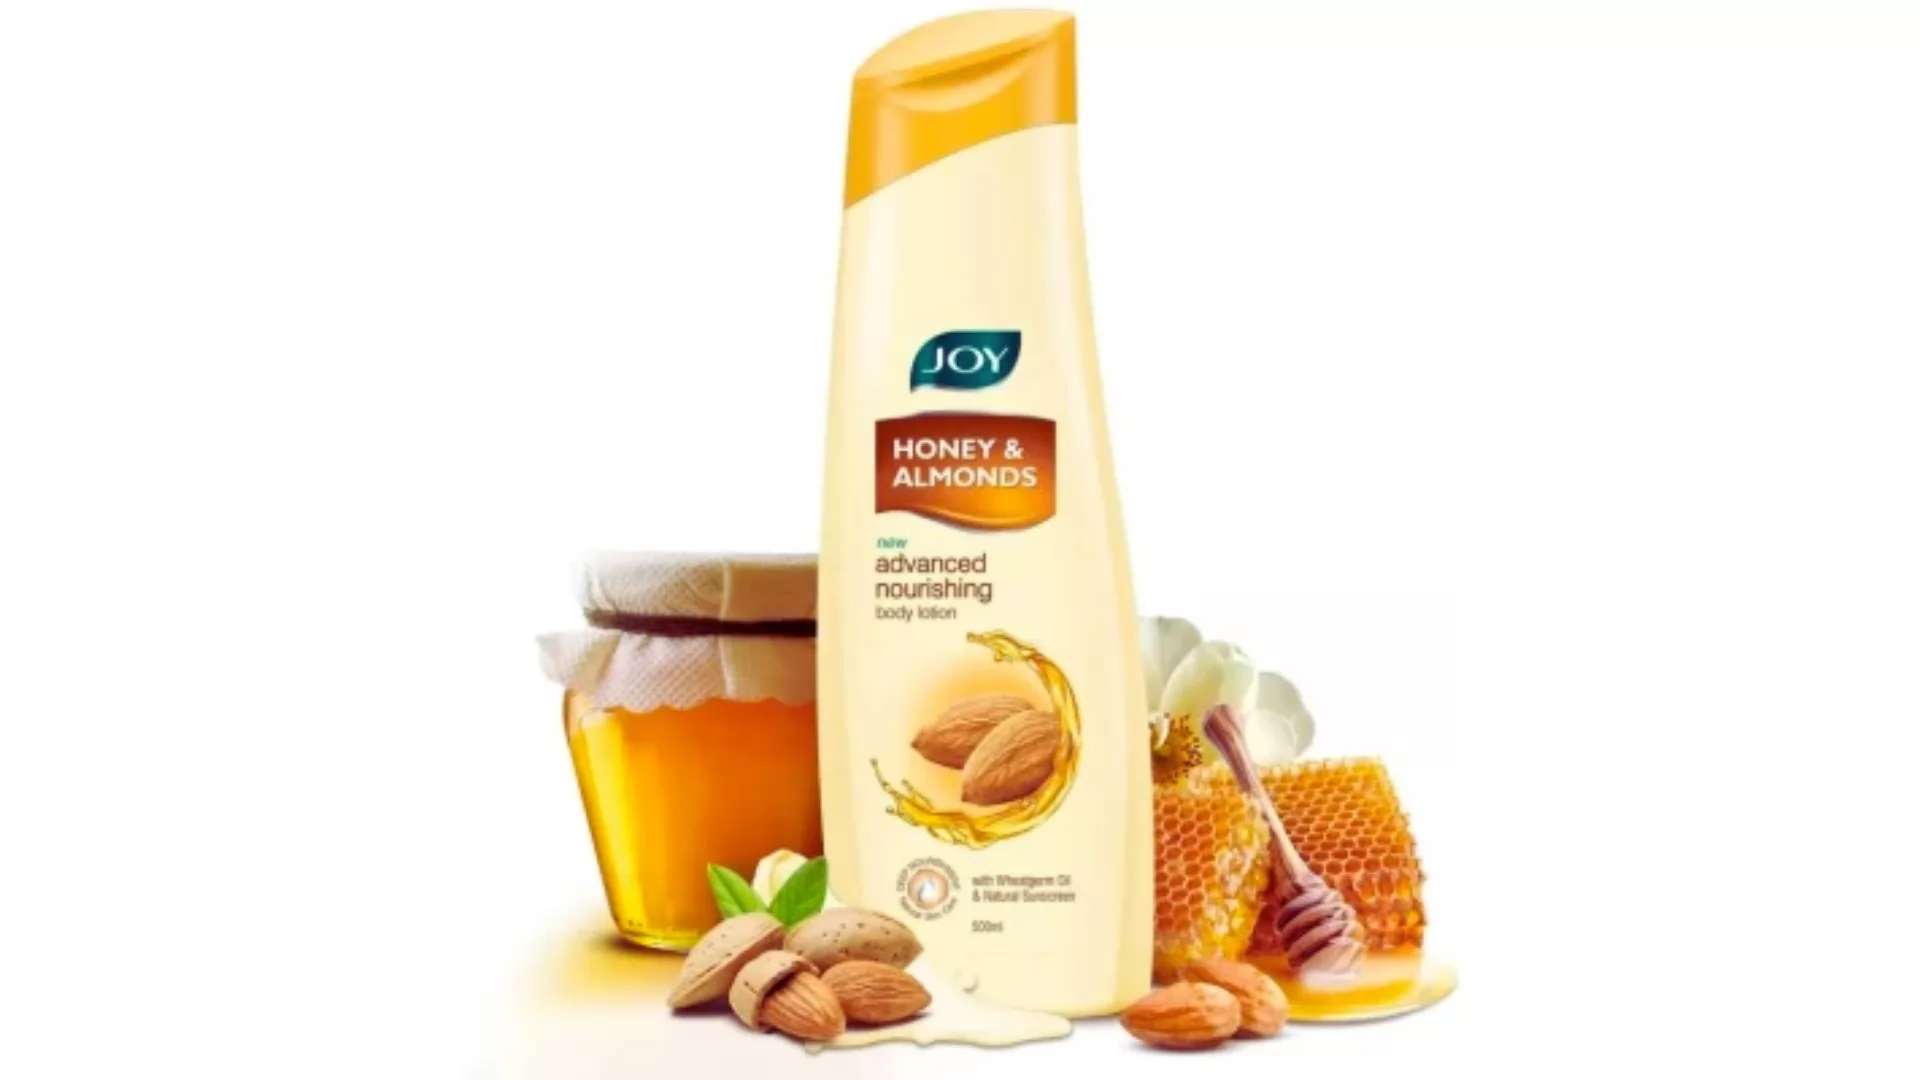 Joy - Honey and Almonds Advance Nourishing body lotion 